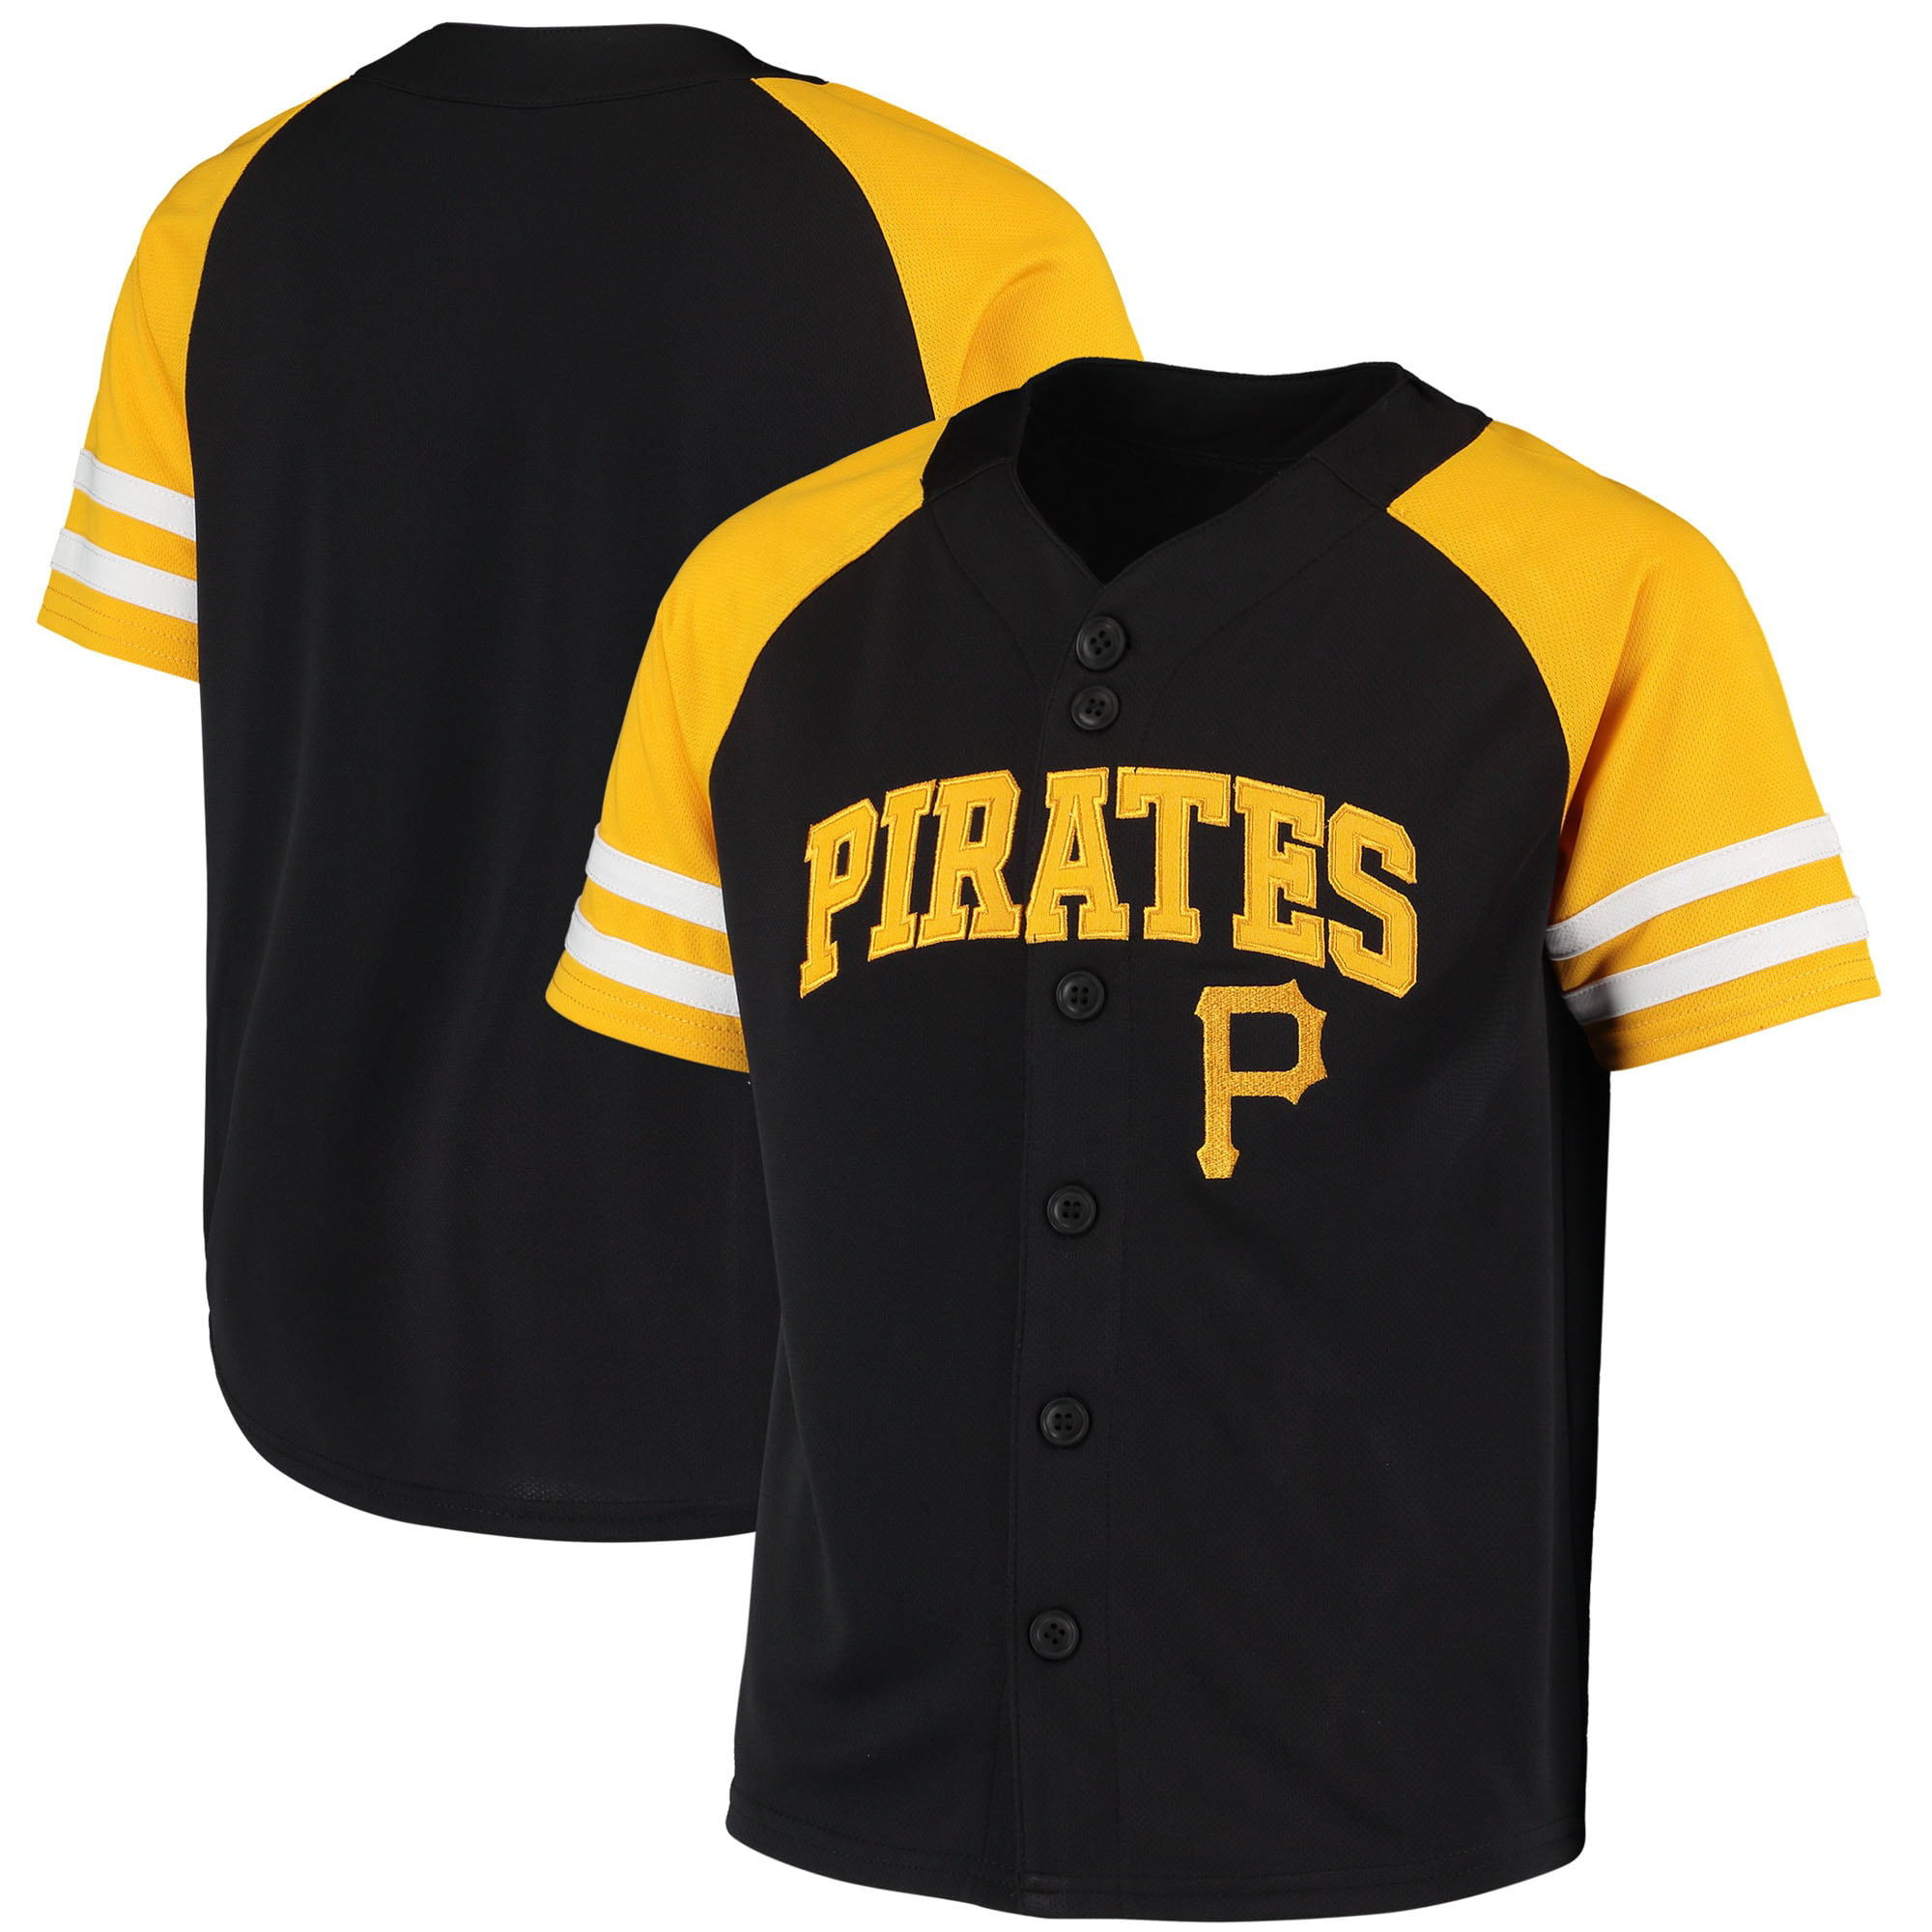 pirates gold jersey